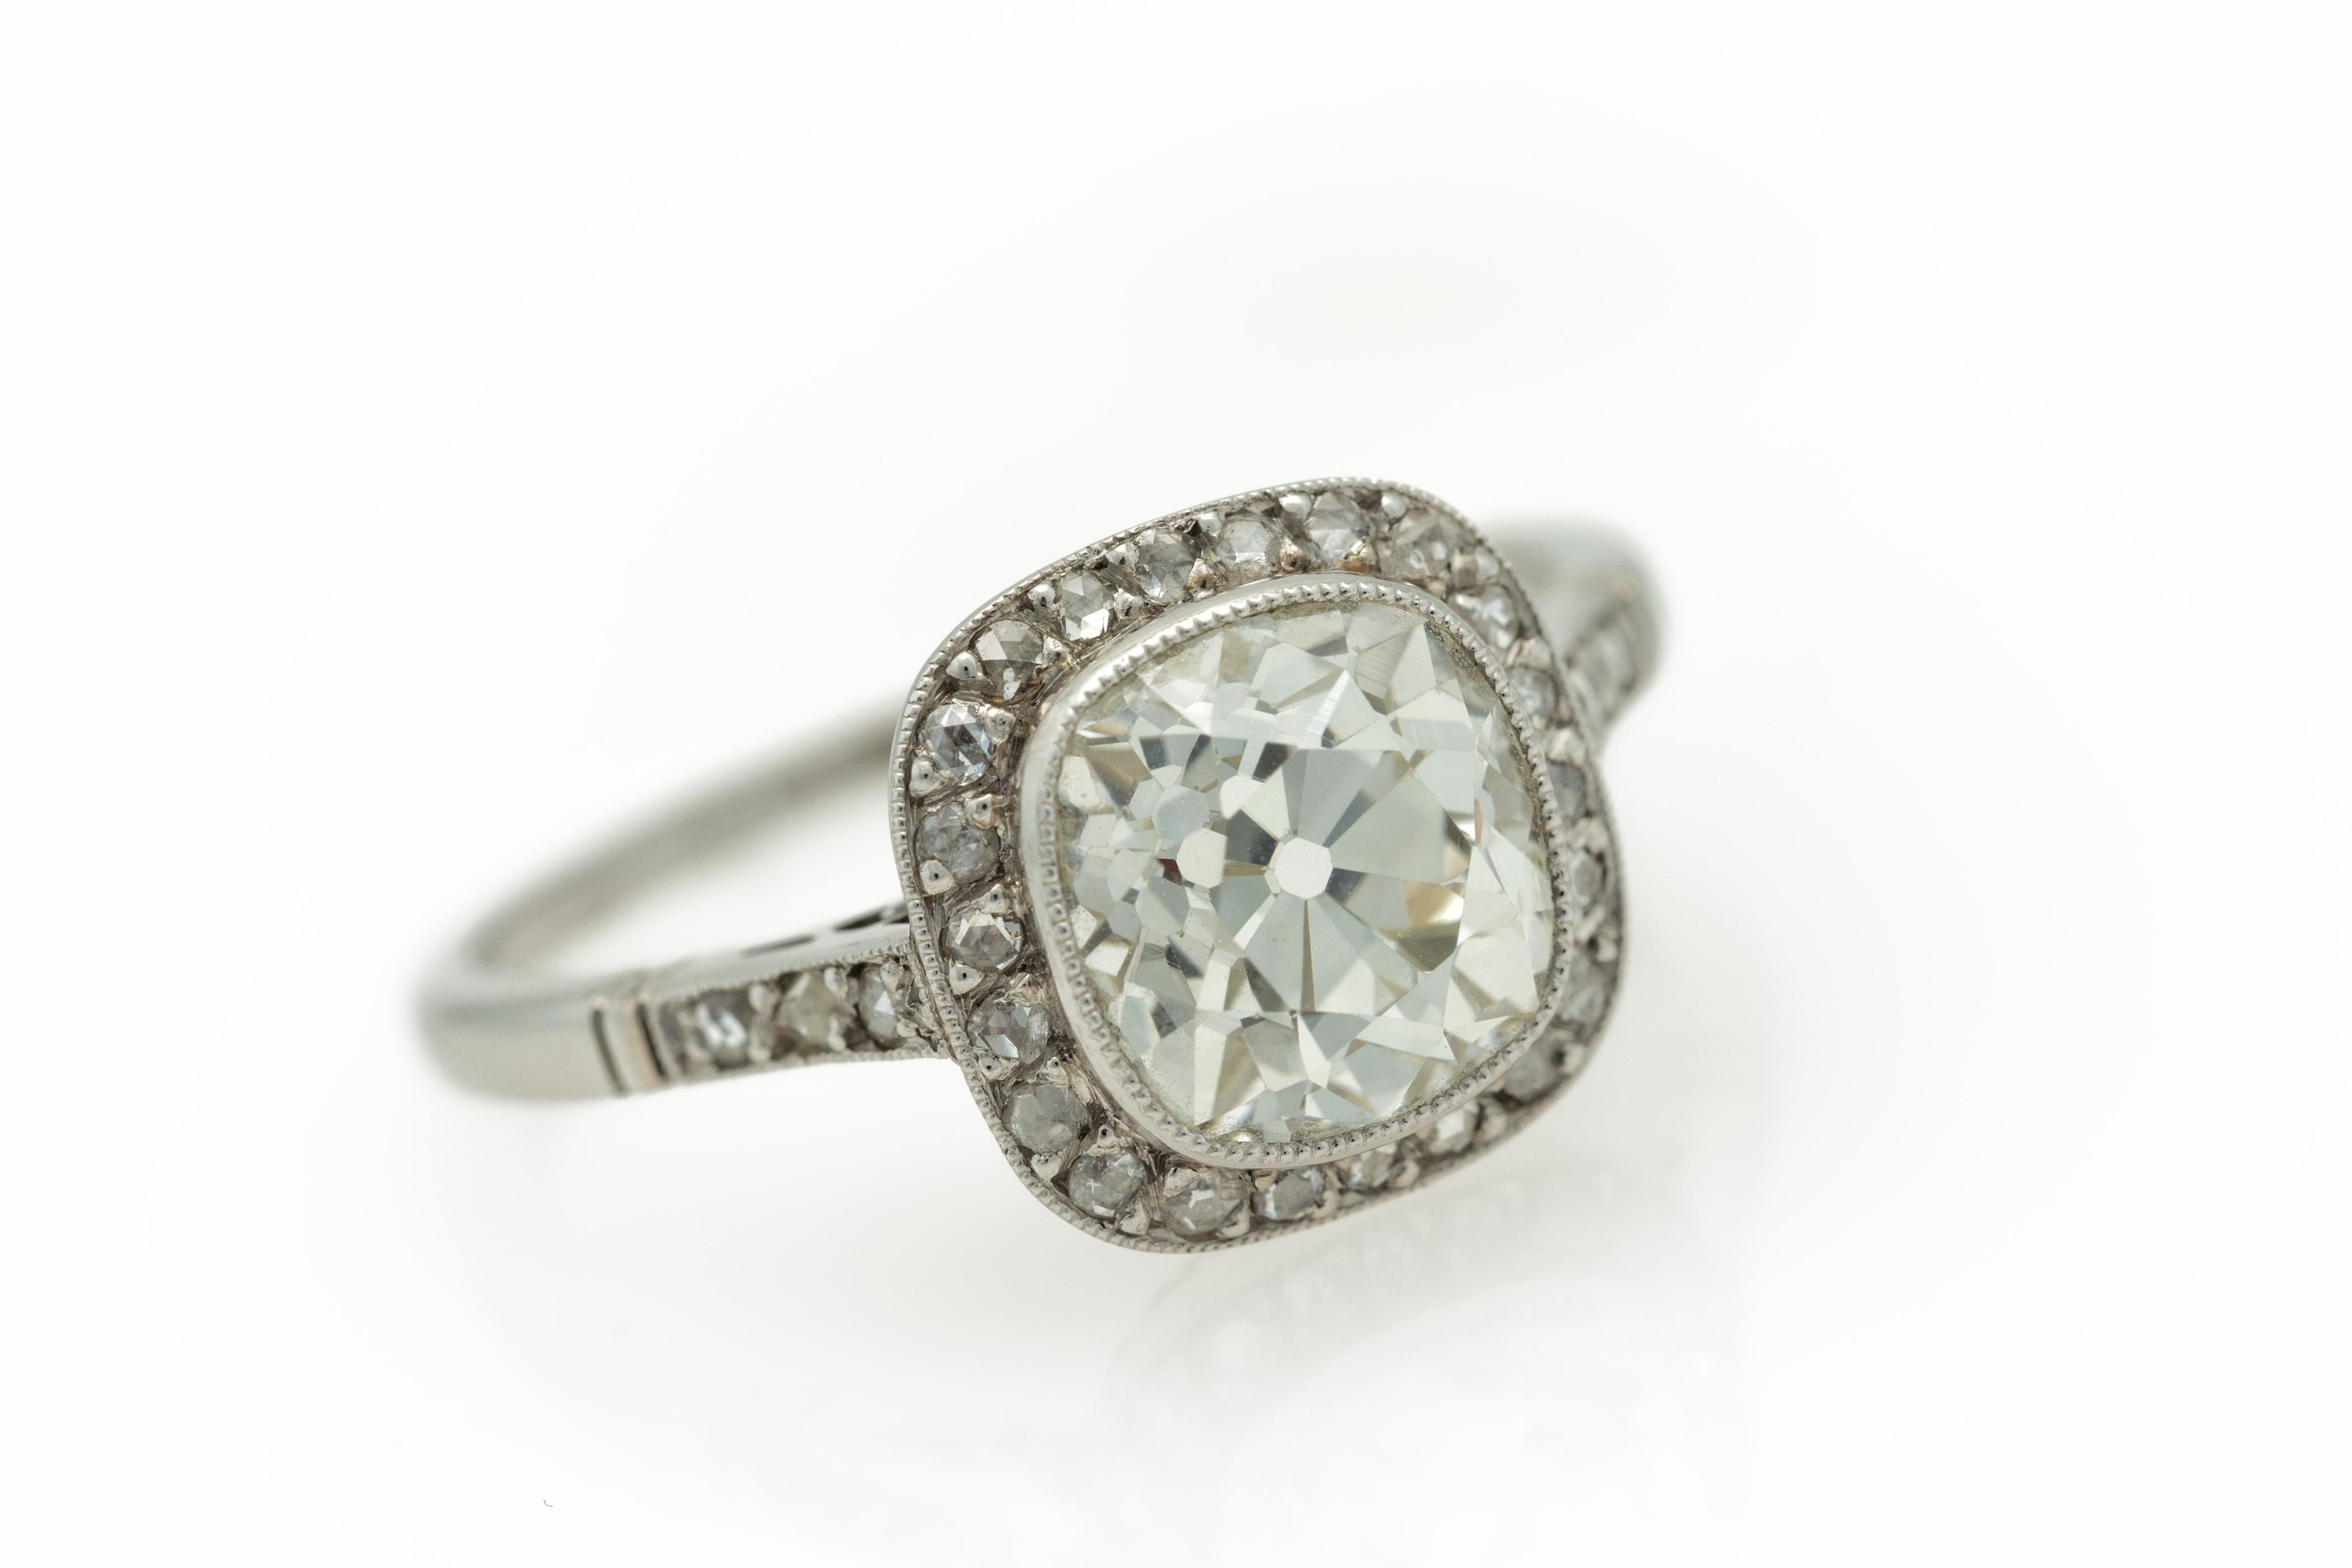 Women's Italian 1950s Art Deco Revival 2.64 Carat Cushion Cut Diamond Ring in Platinum